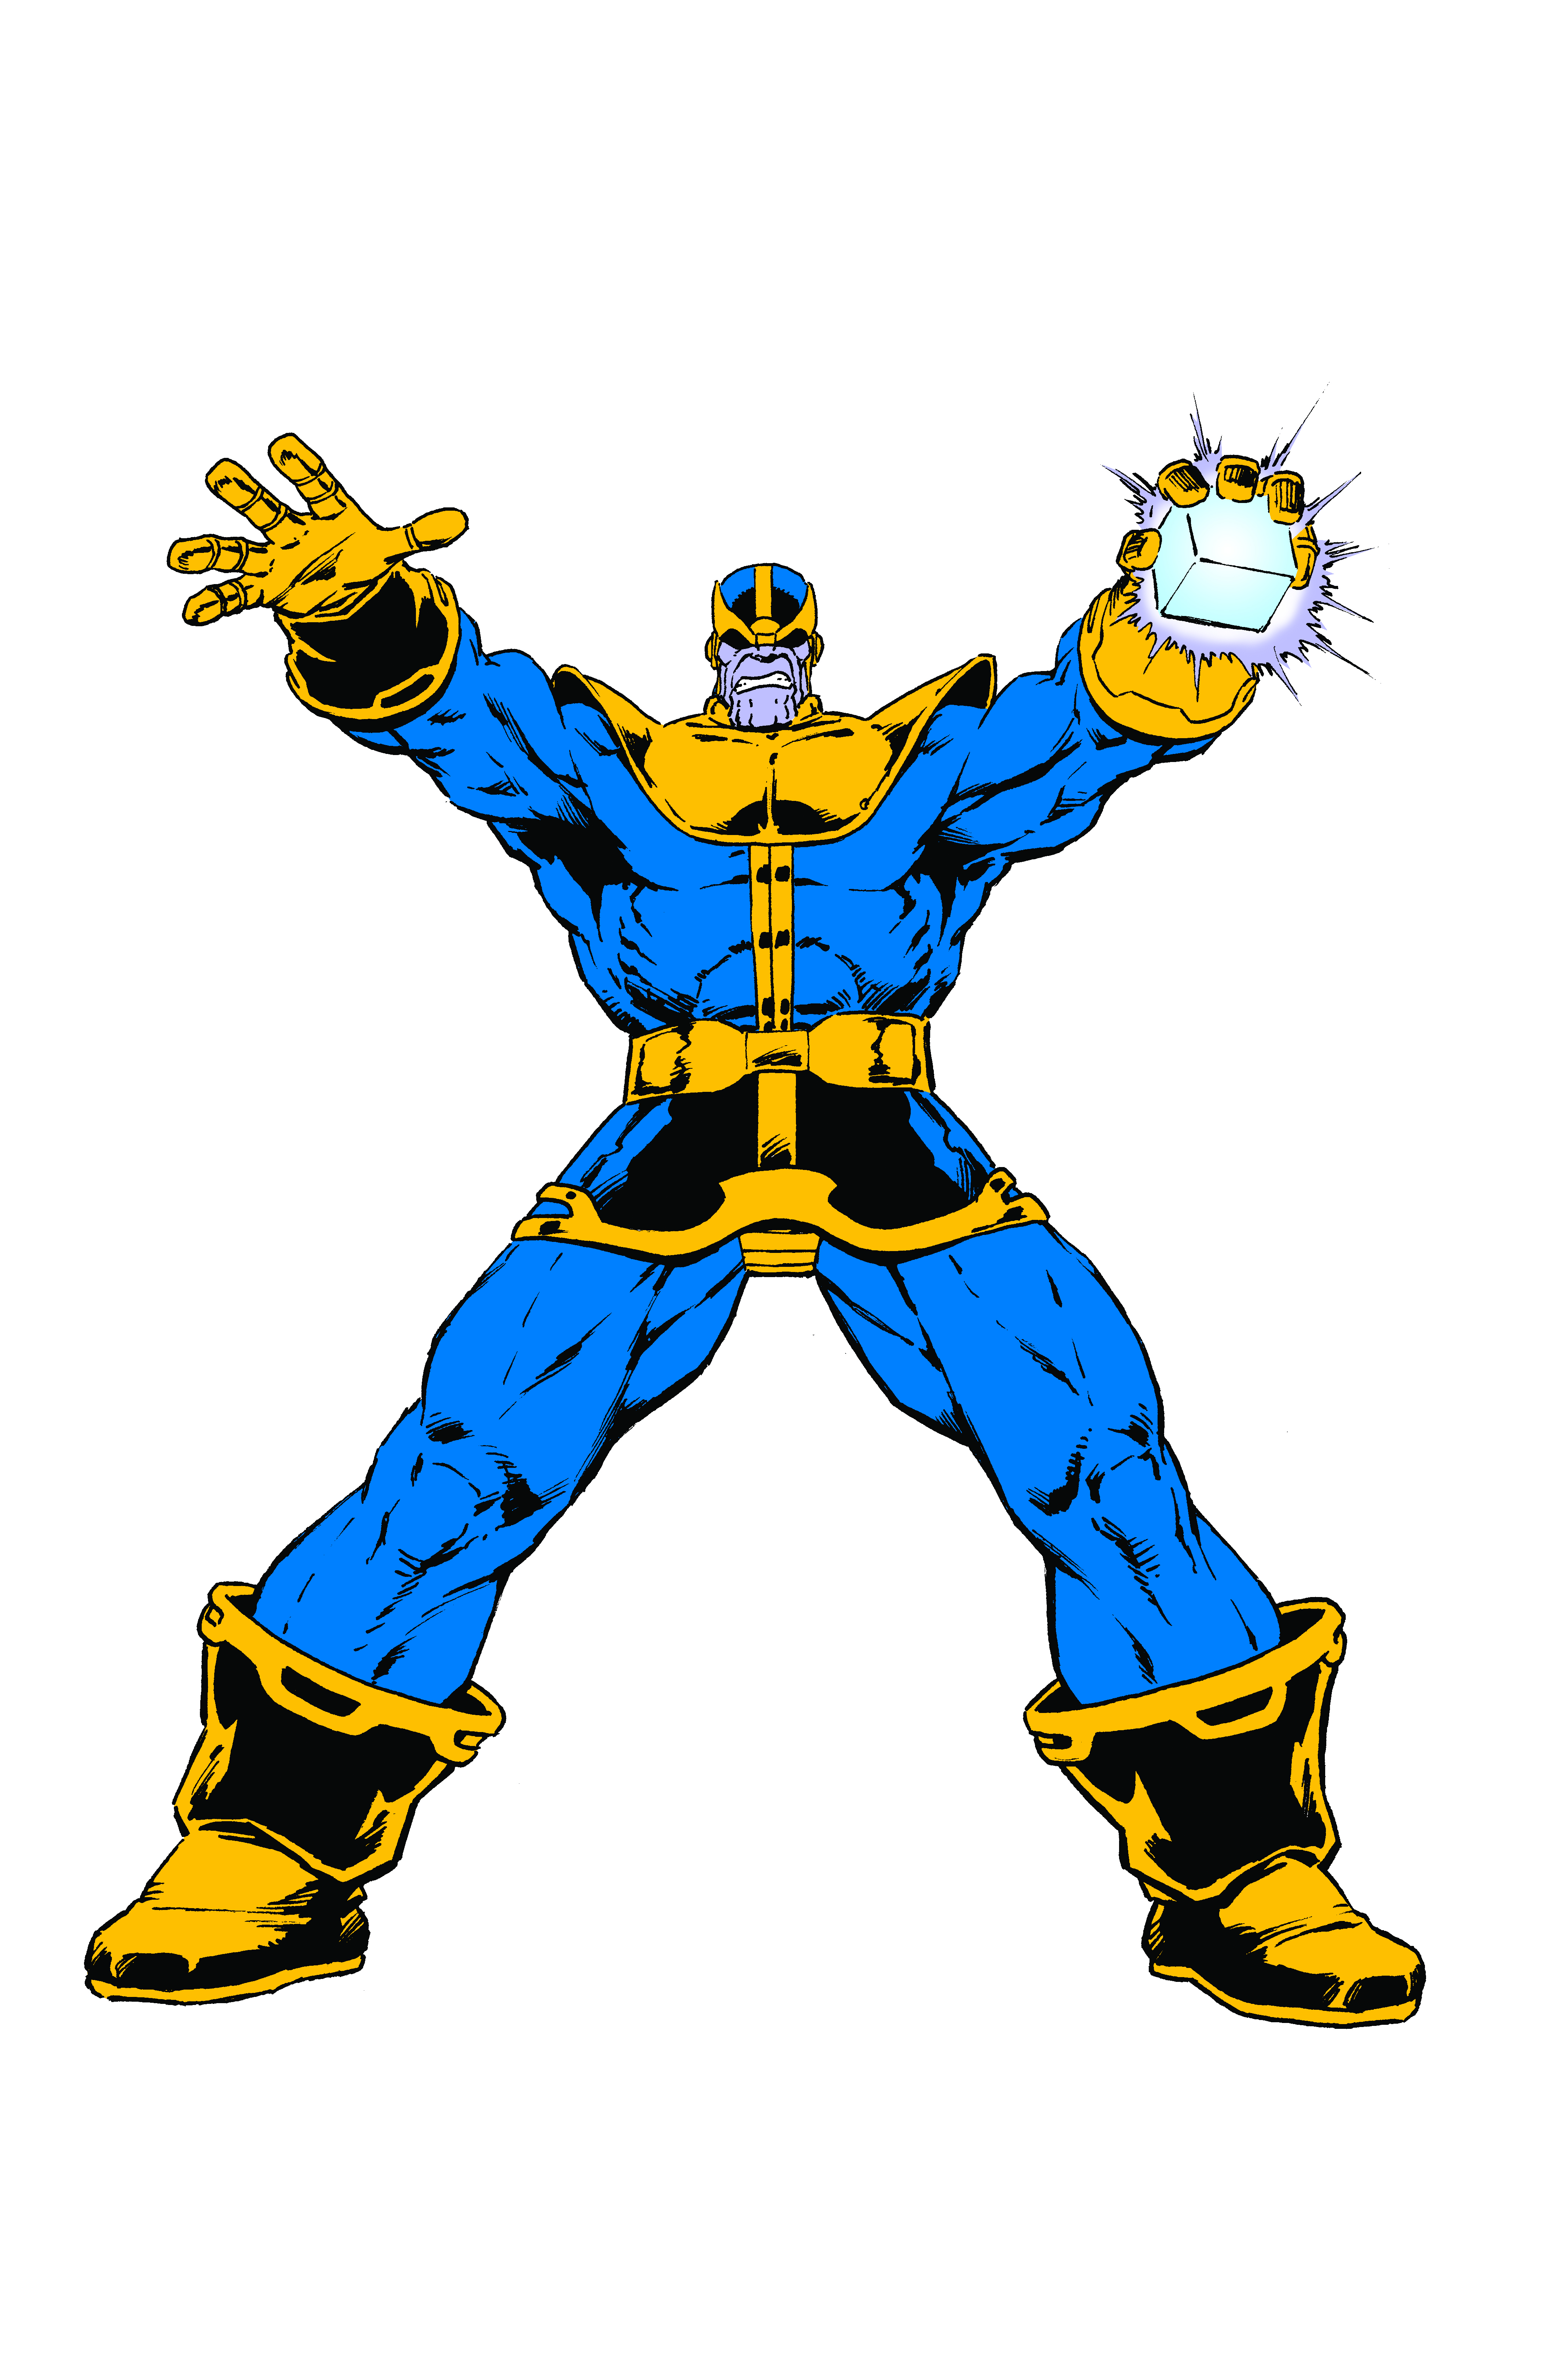 Avengers 'Anti-Hero' Thanos Born in Detroit - WDET  FM